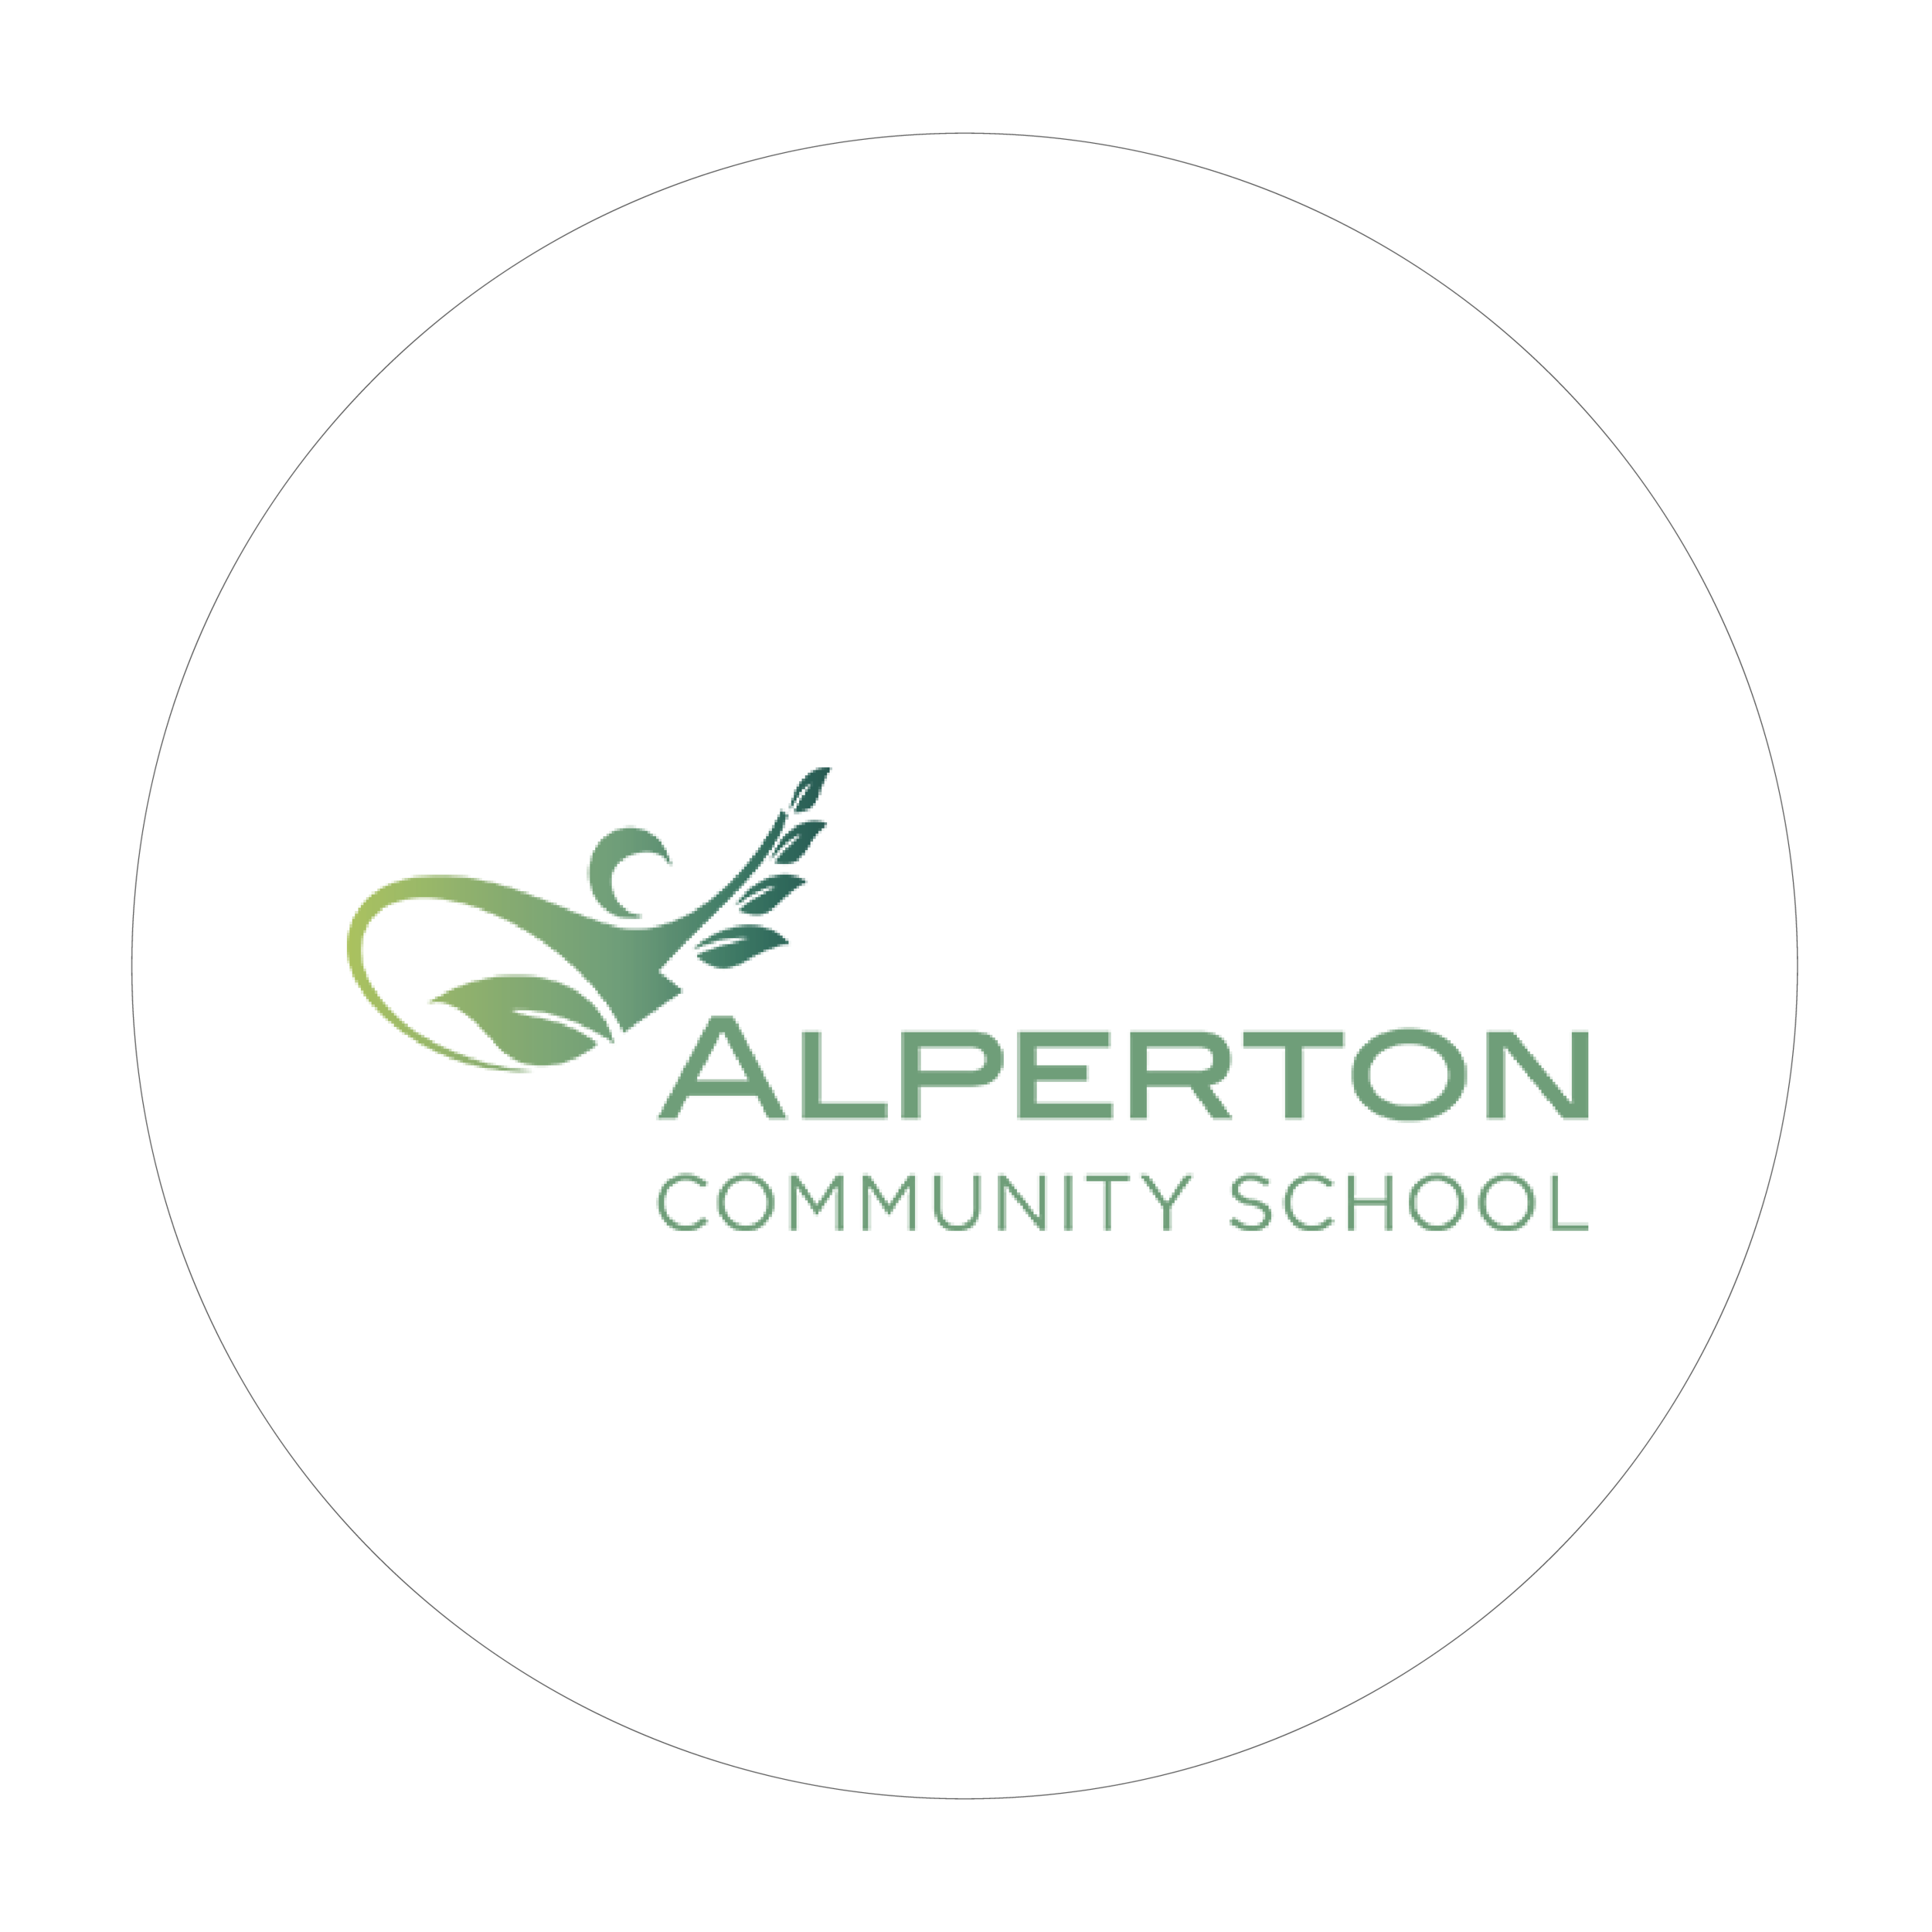 Alperton Community School